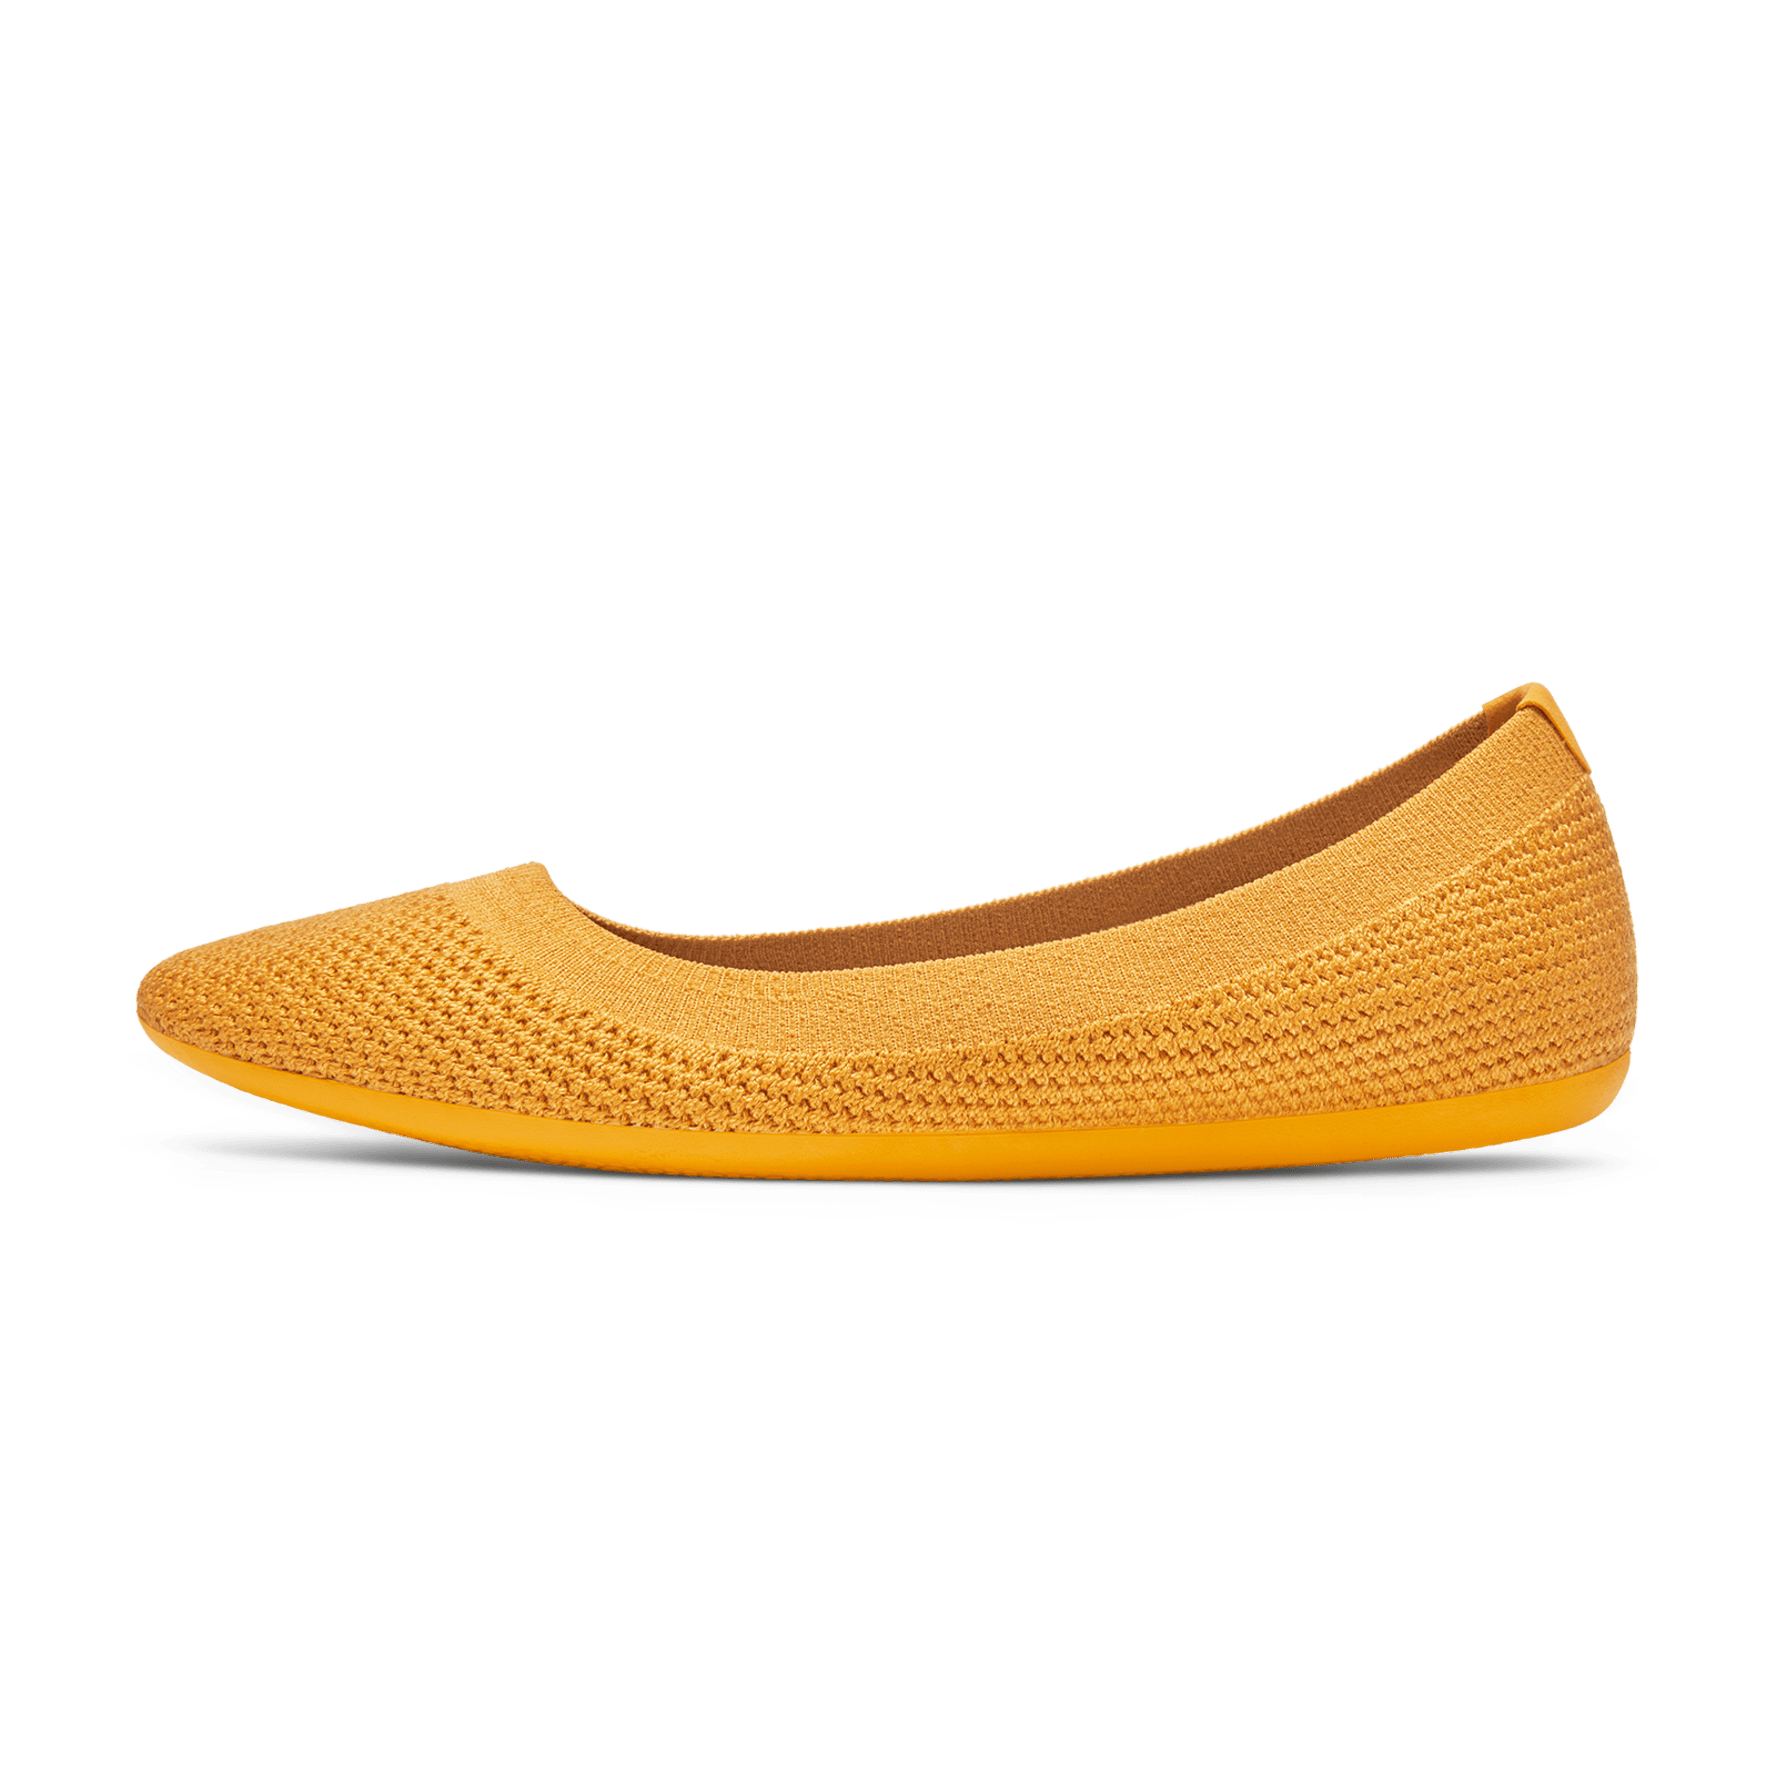 Allbirds Women's Tree Runners shoes US 8 Yellow Running Sneakers